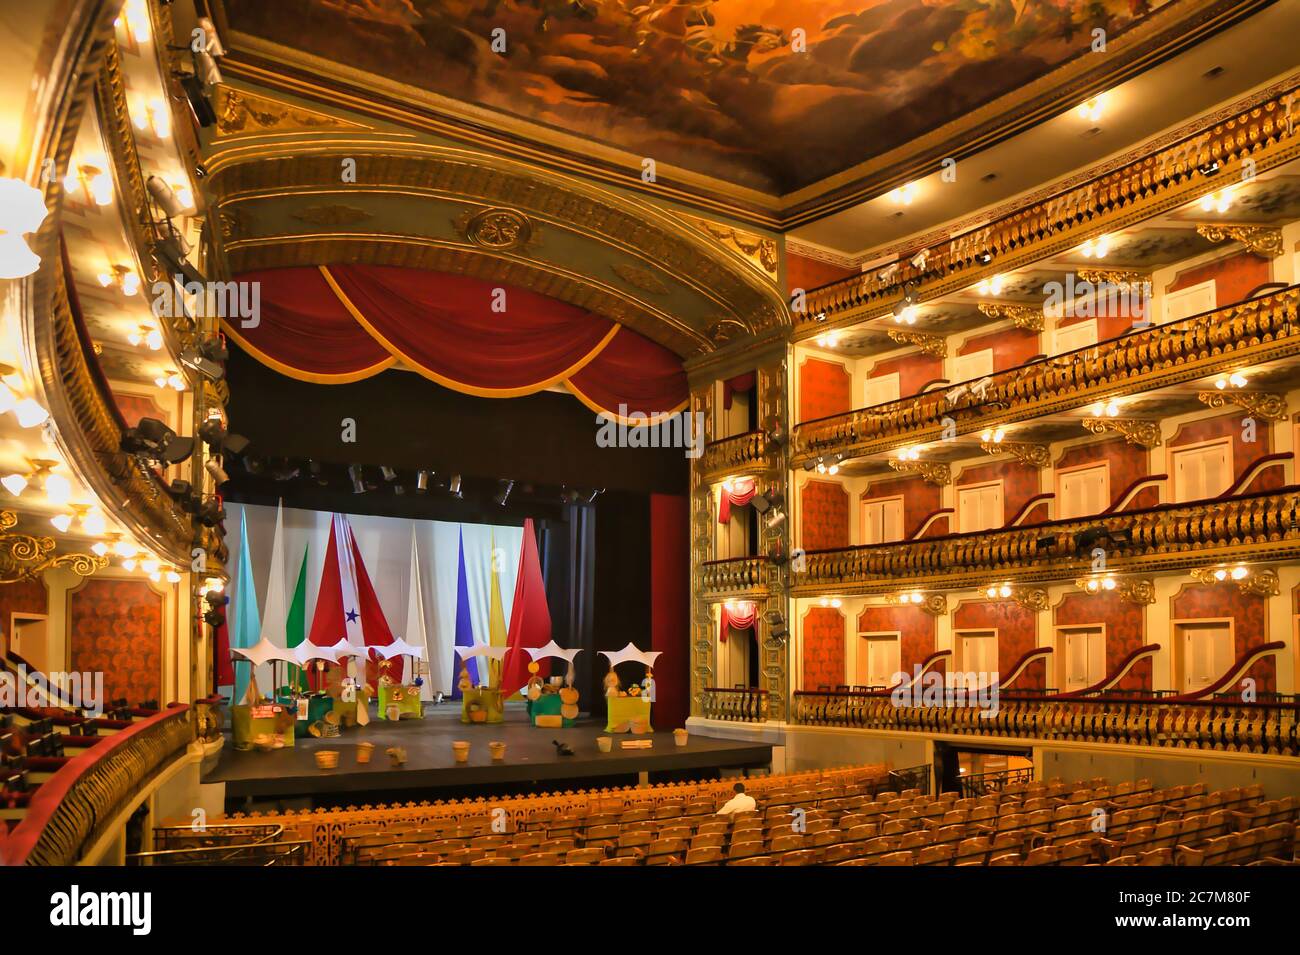 The Theatro (Theatre) da Paz interior and stage, in Belem, Para State, Brazil. Stock Photo